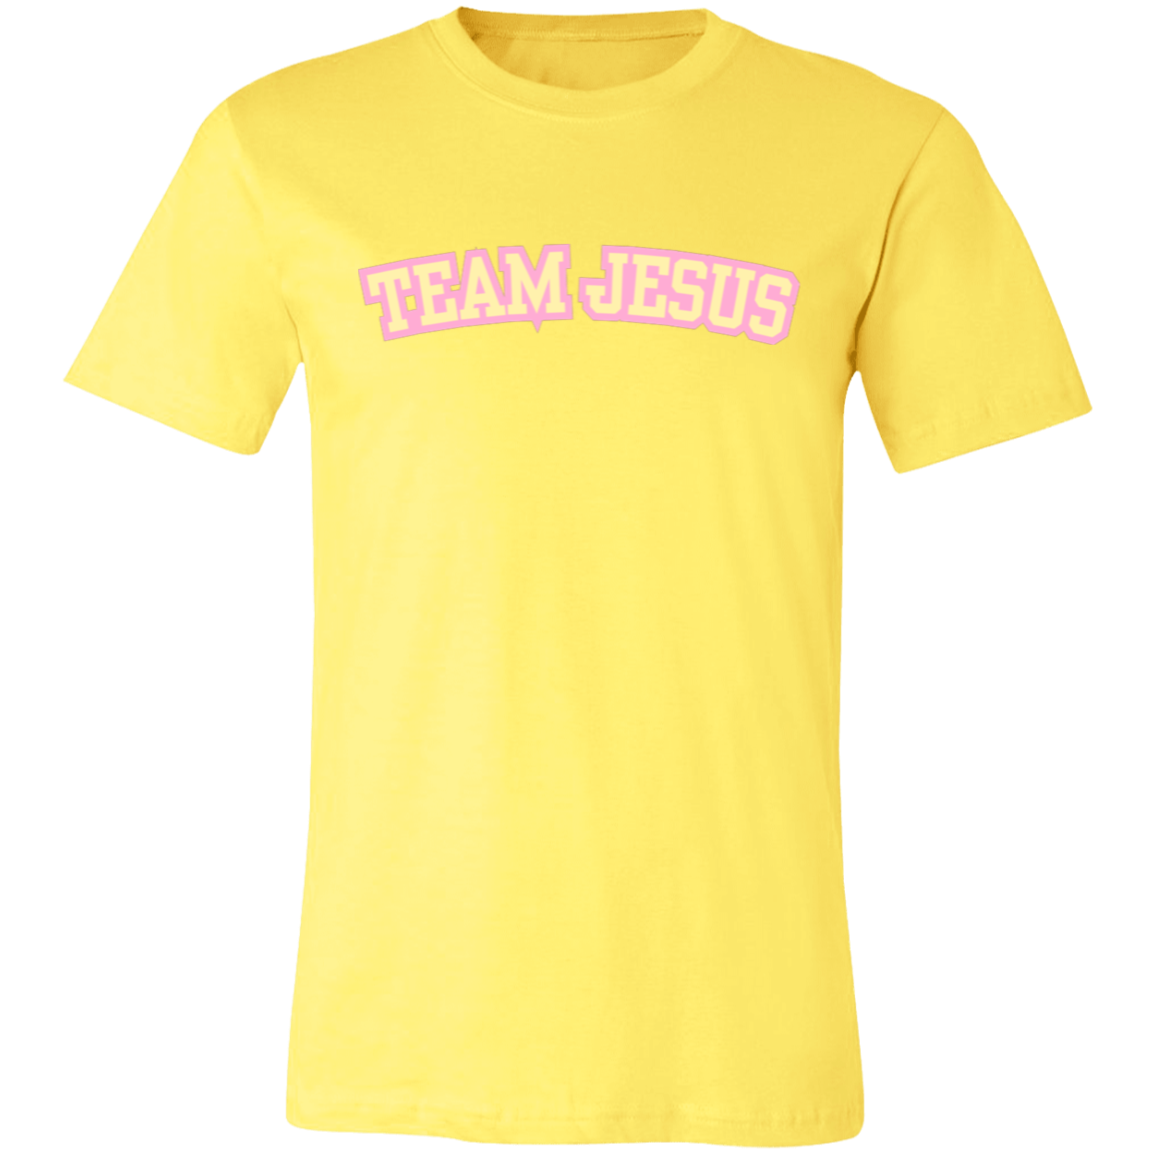 Team Jesus -T Shirt